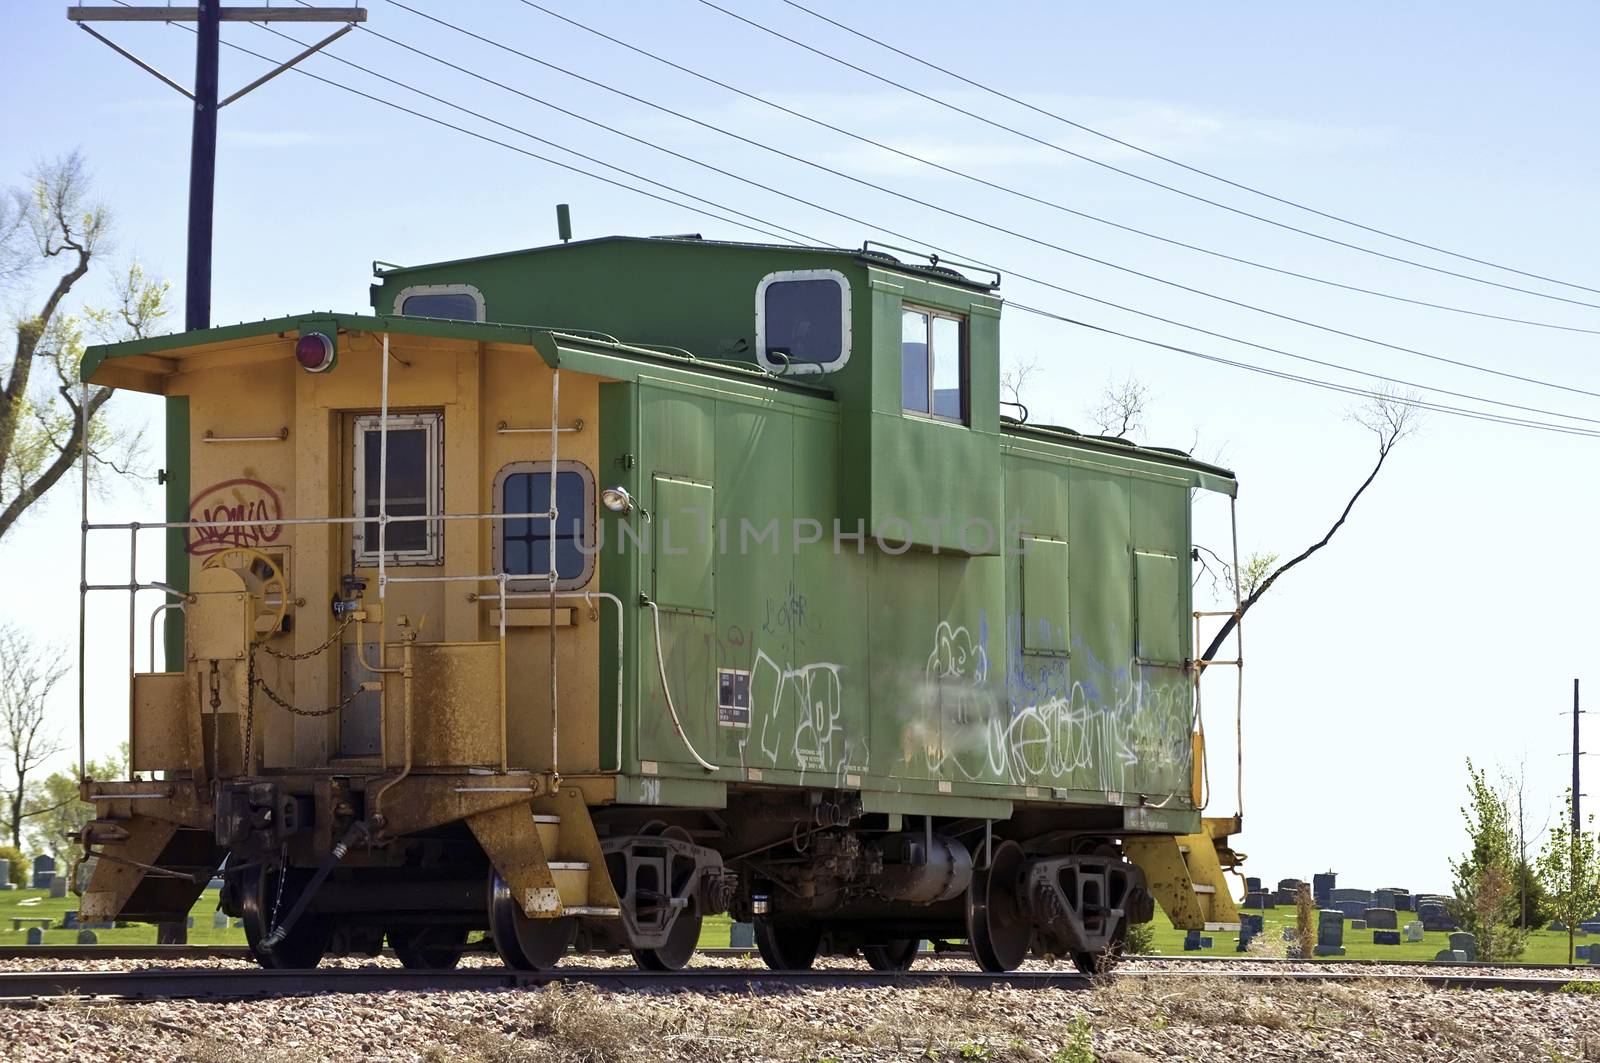 Railrolad caboose sits on a siding gathering grafitti near a cemetary.